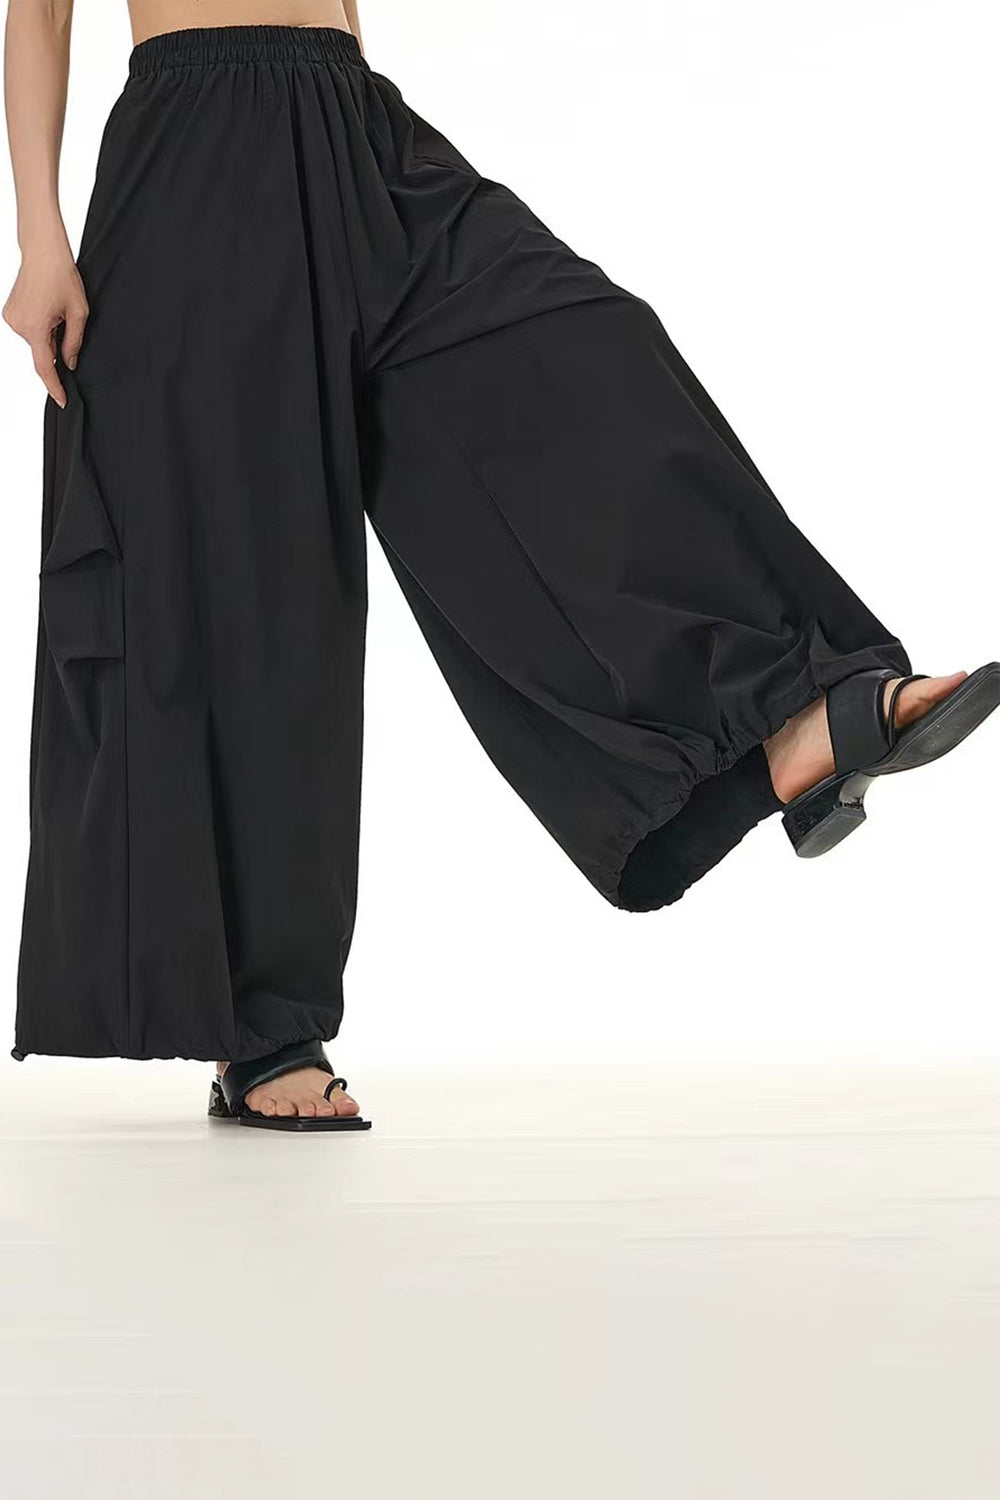 Black streetwear pants with elasticated waist